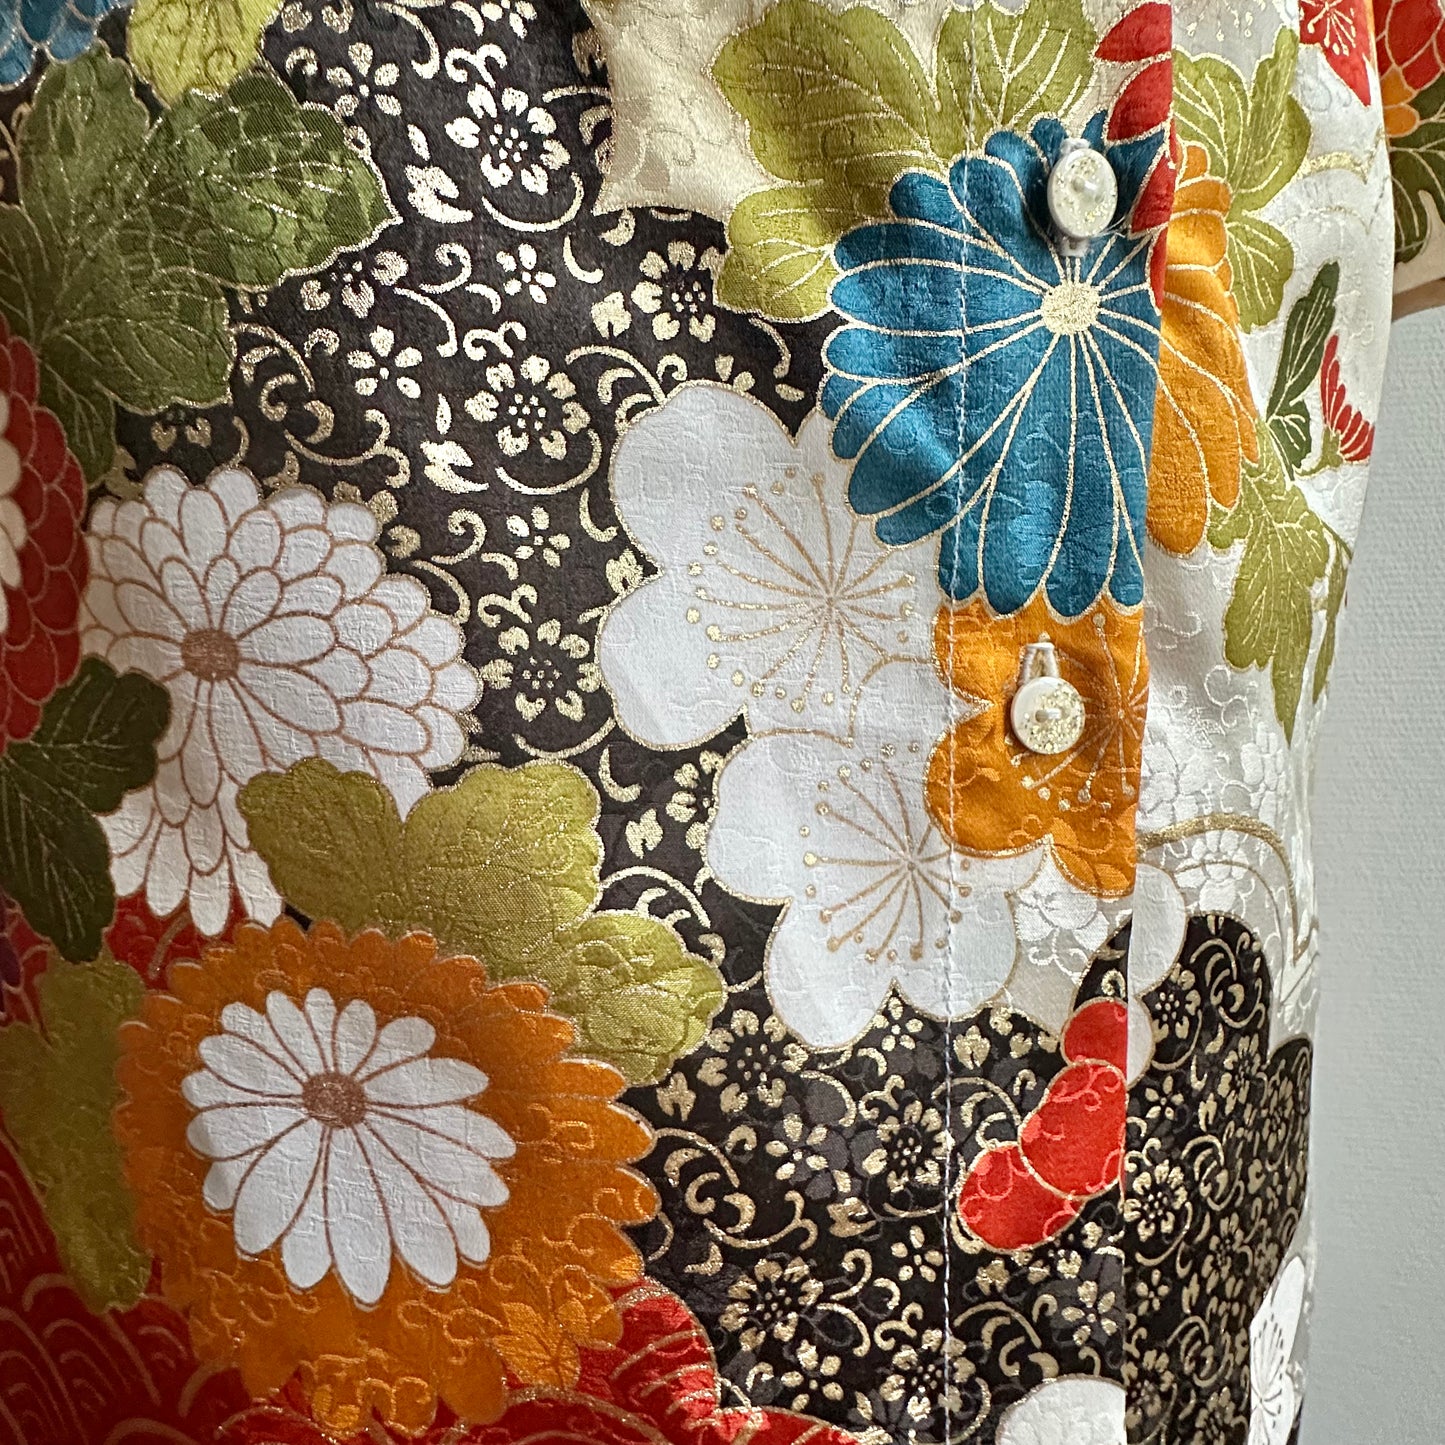 Silk Kimono shirt dress, Furisode, Handcrafted, Upcycled, #pre10